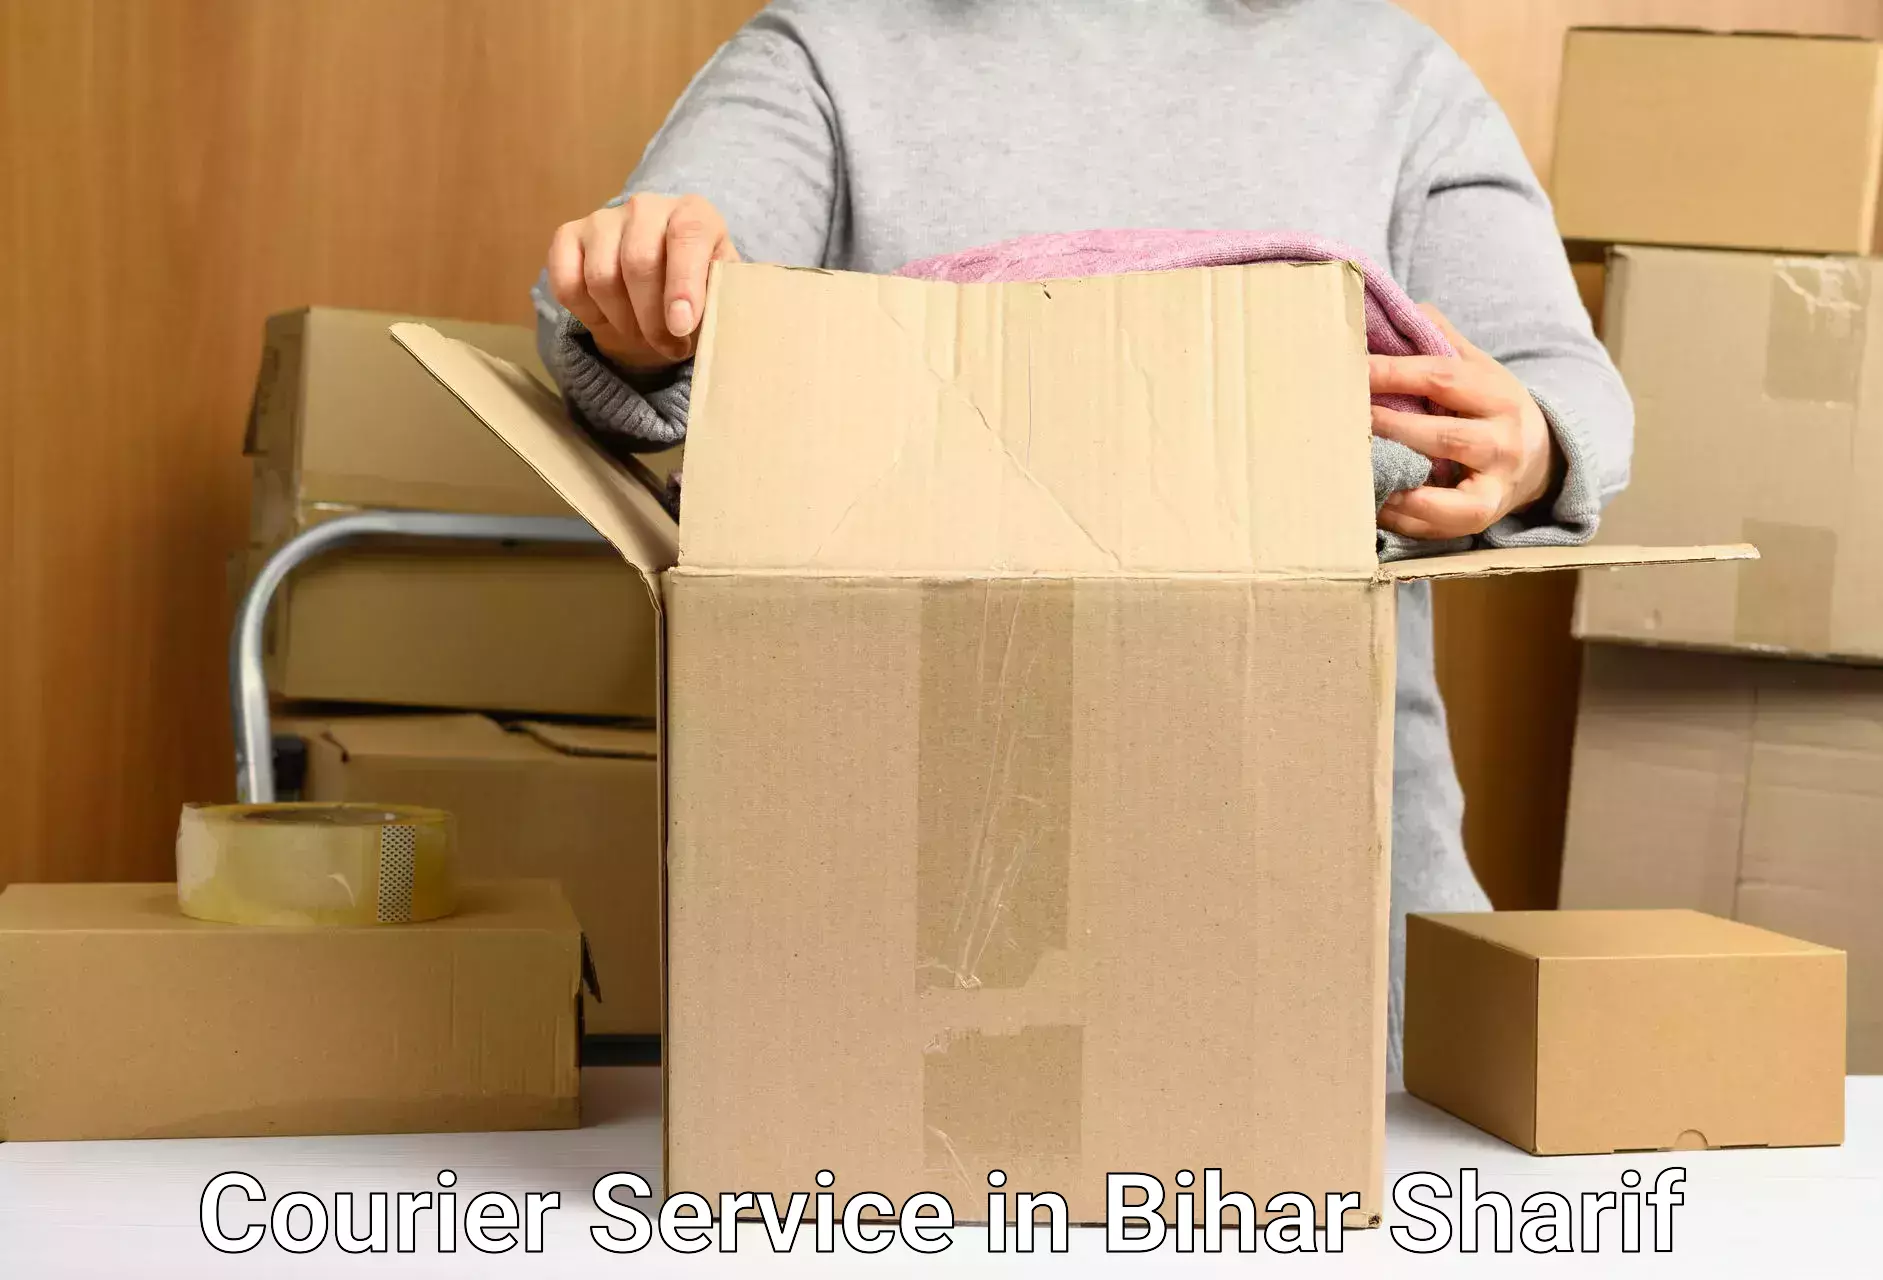 Courier insurance in Bihar Sharif